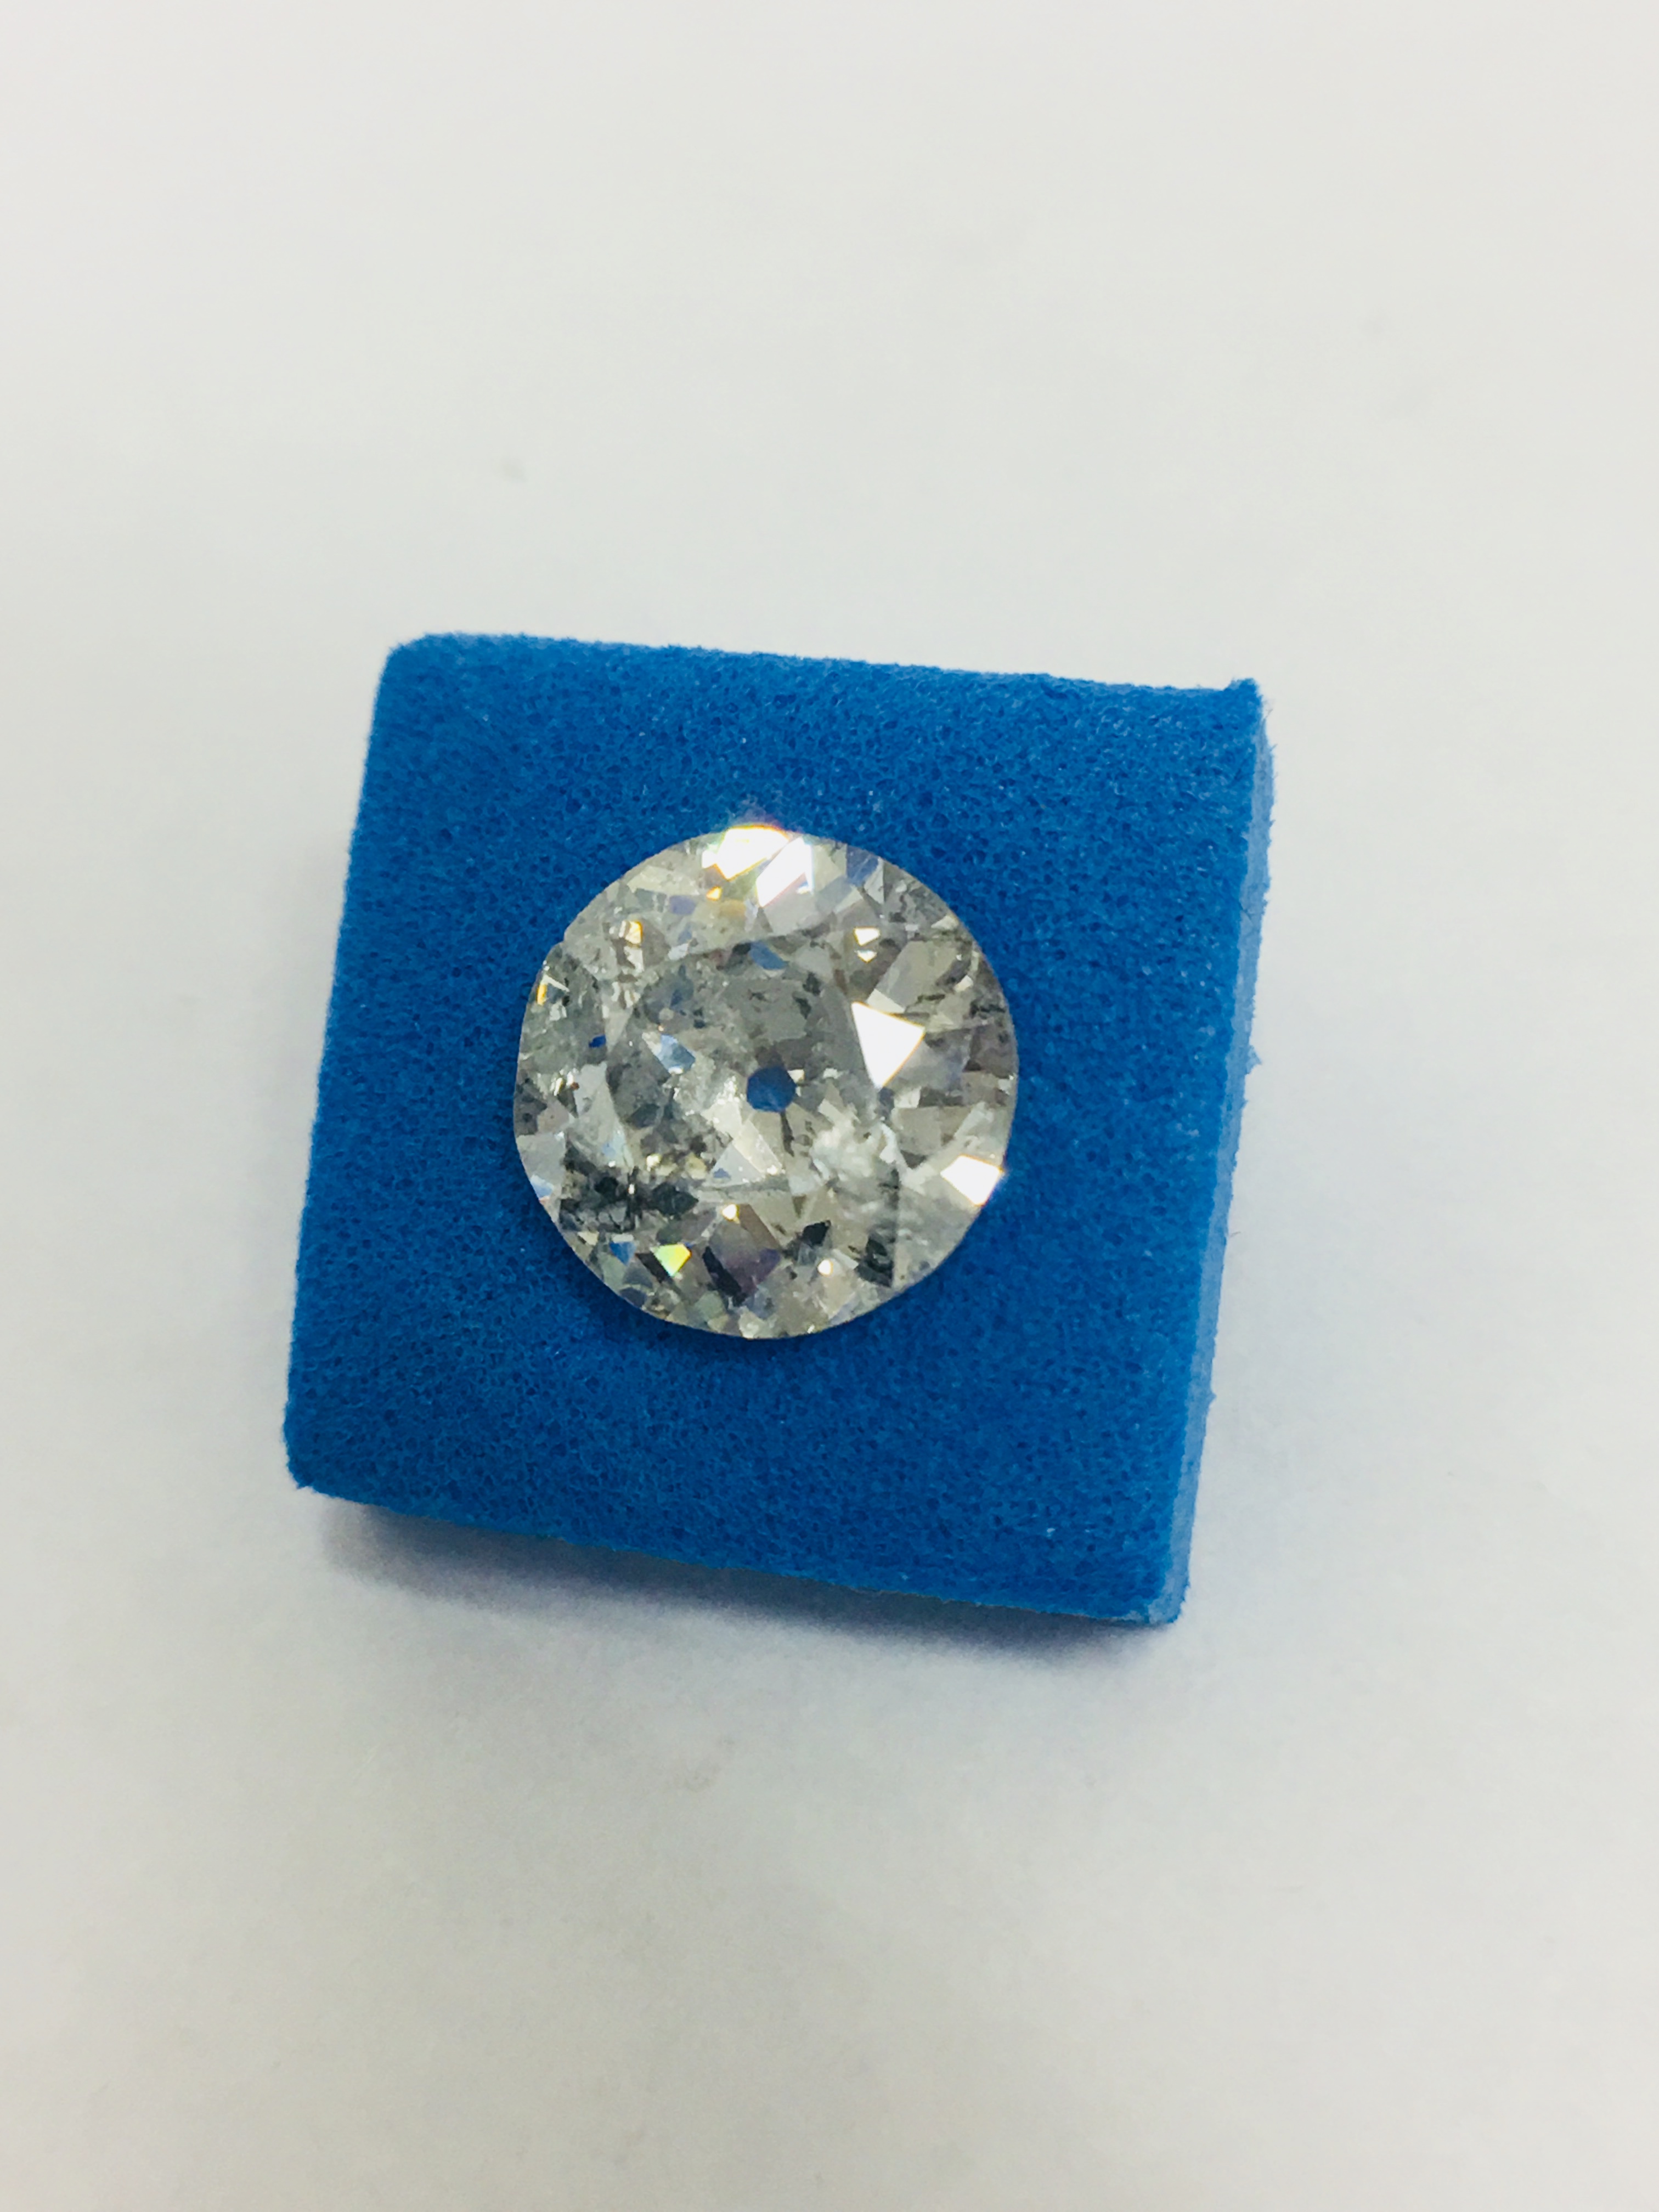 2.07ct Old cut Diamond - Image 2 of 2